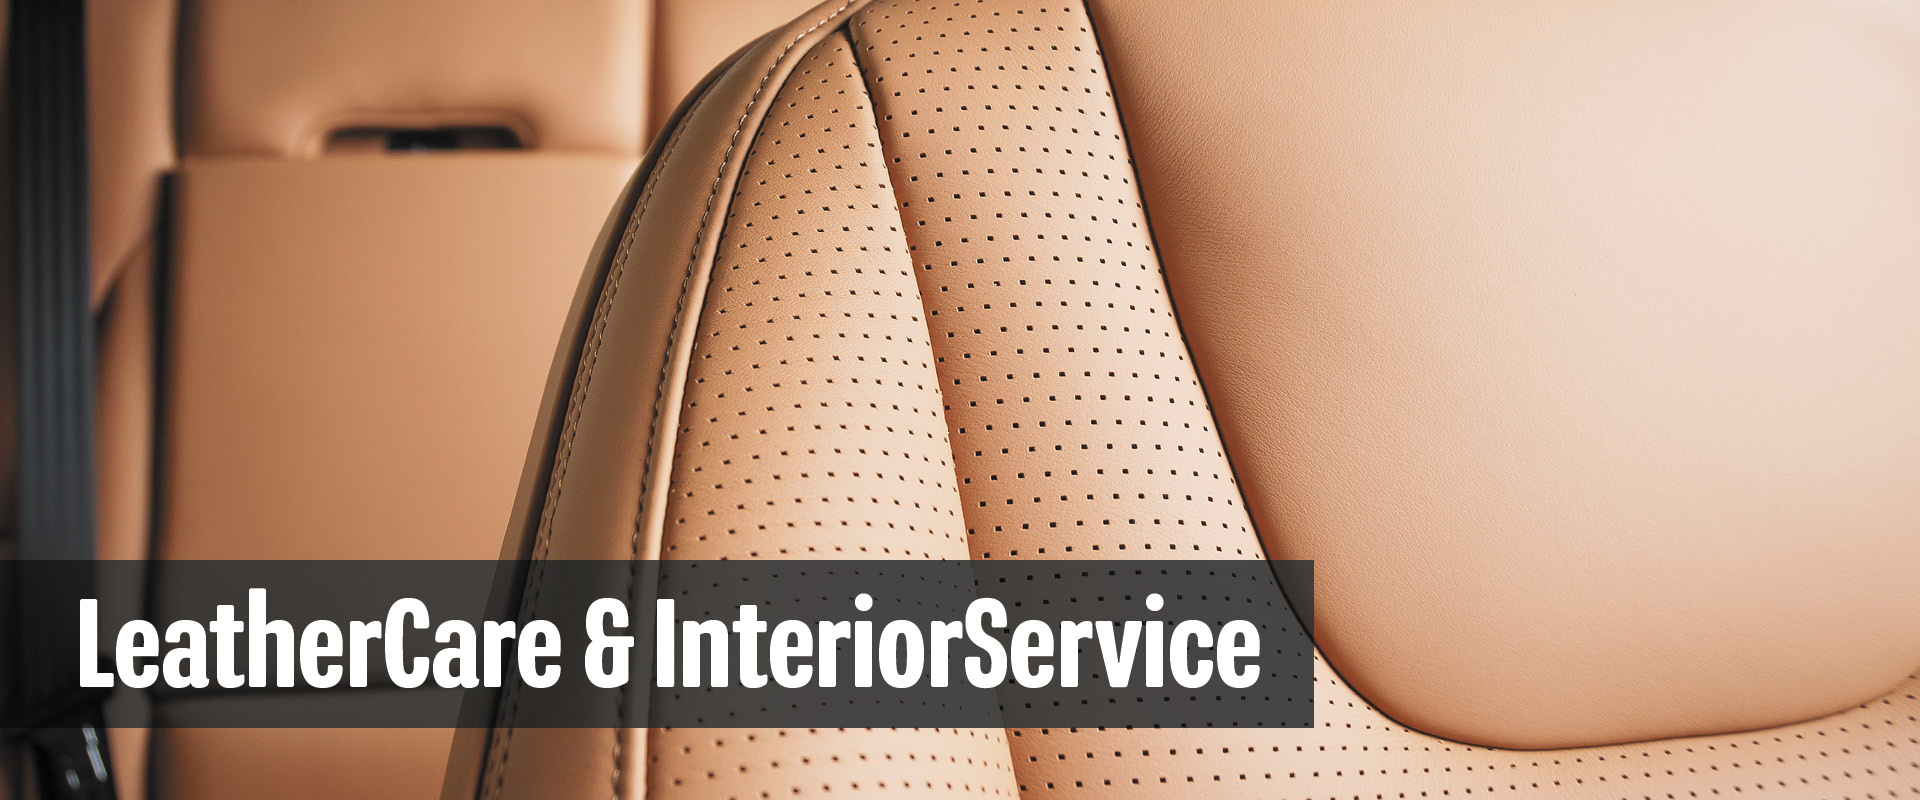 LeatherCare & InteriorService lädervård